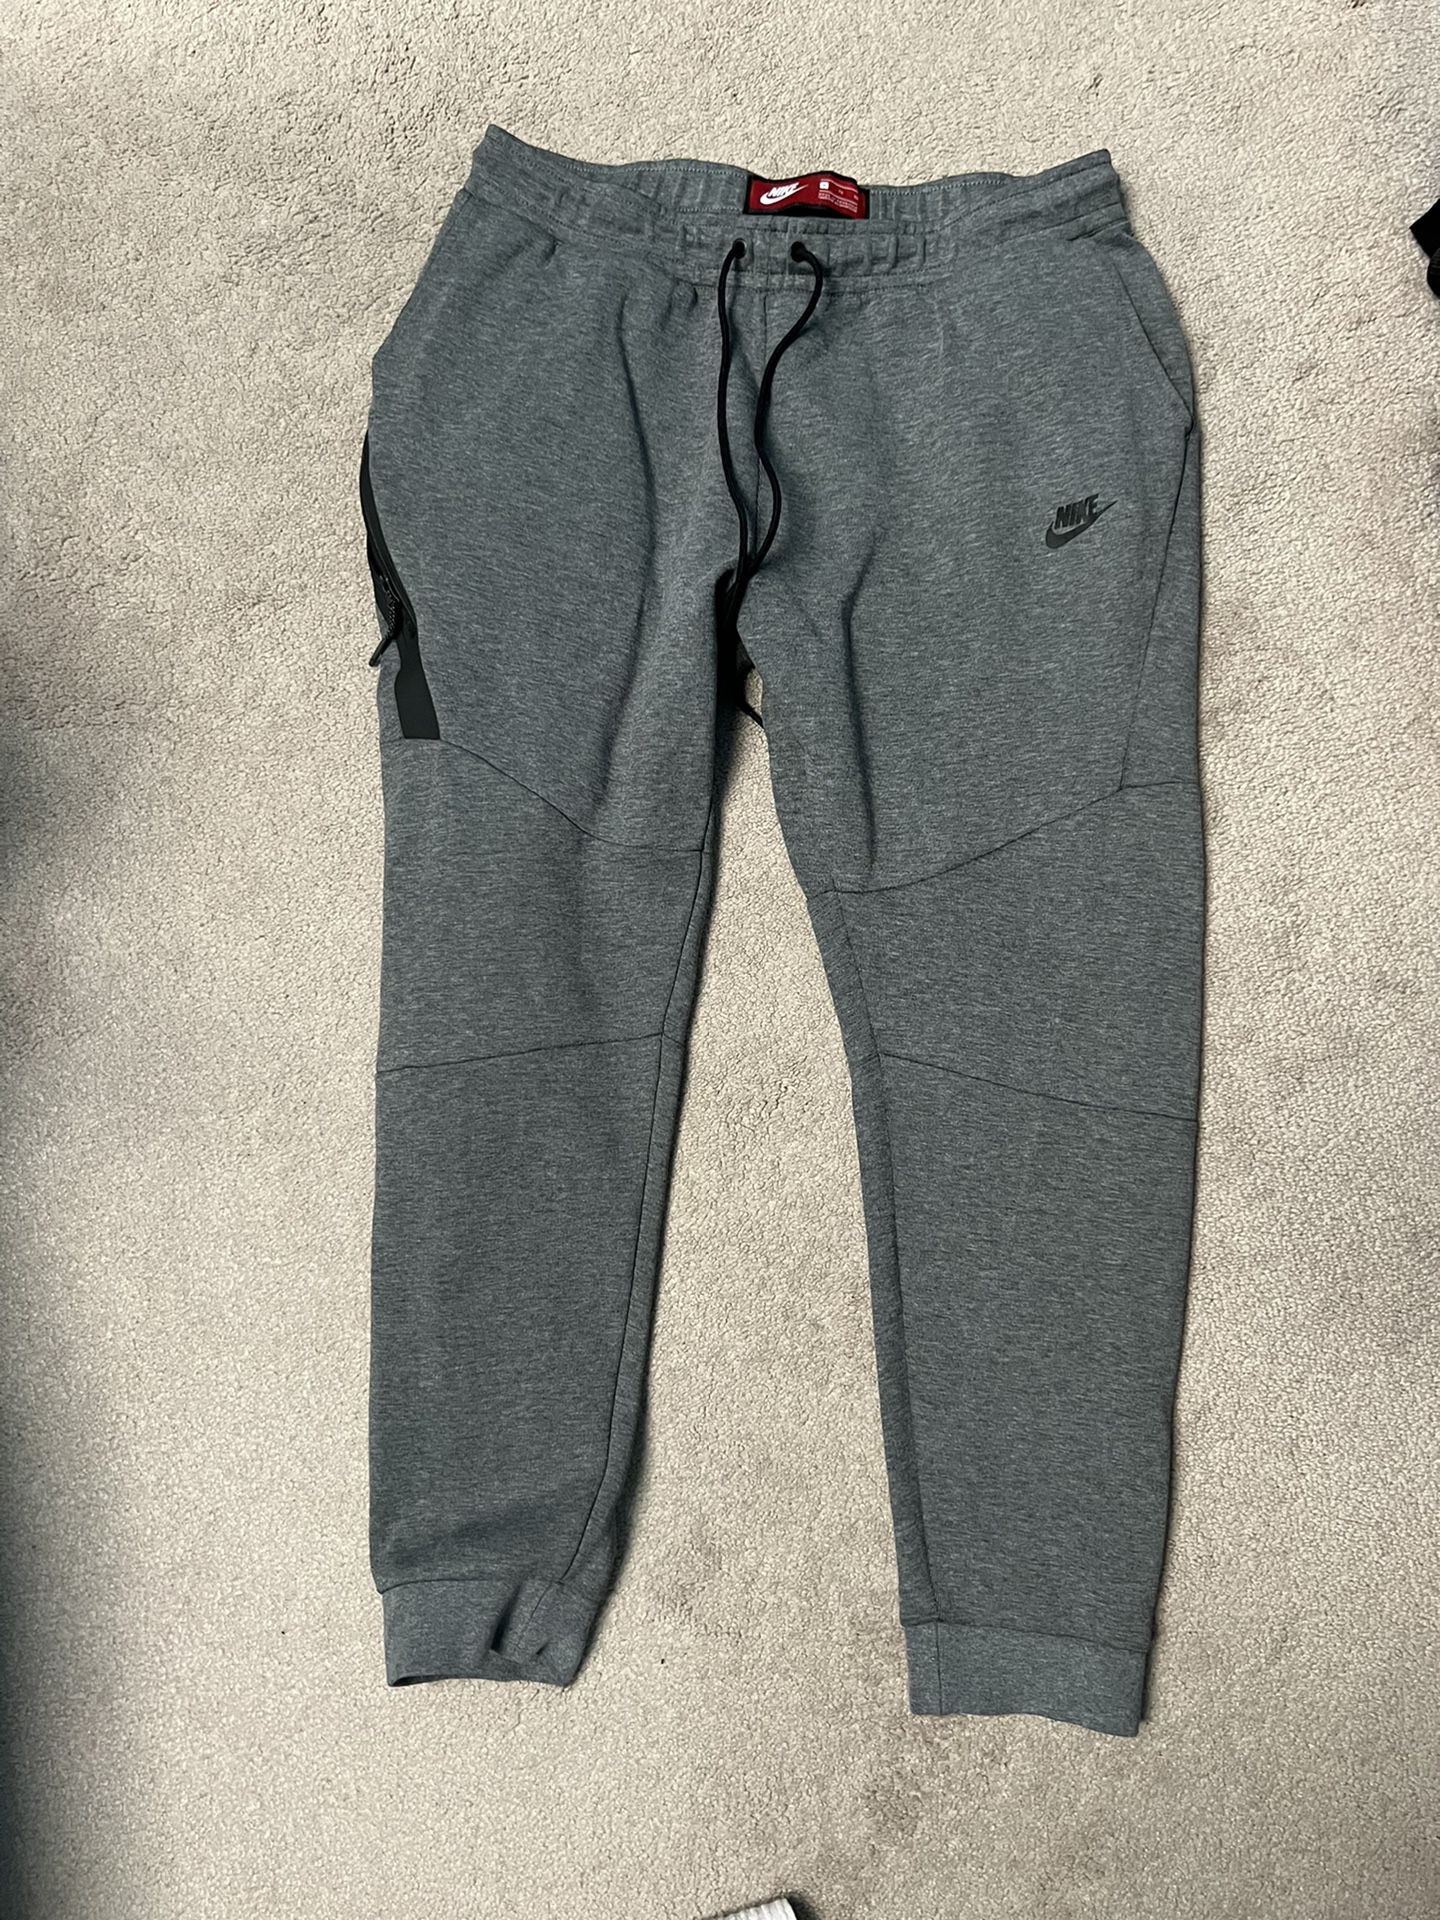 Nike Tech fleece Pants  XL